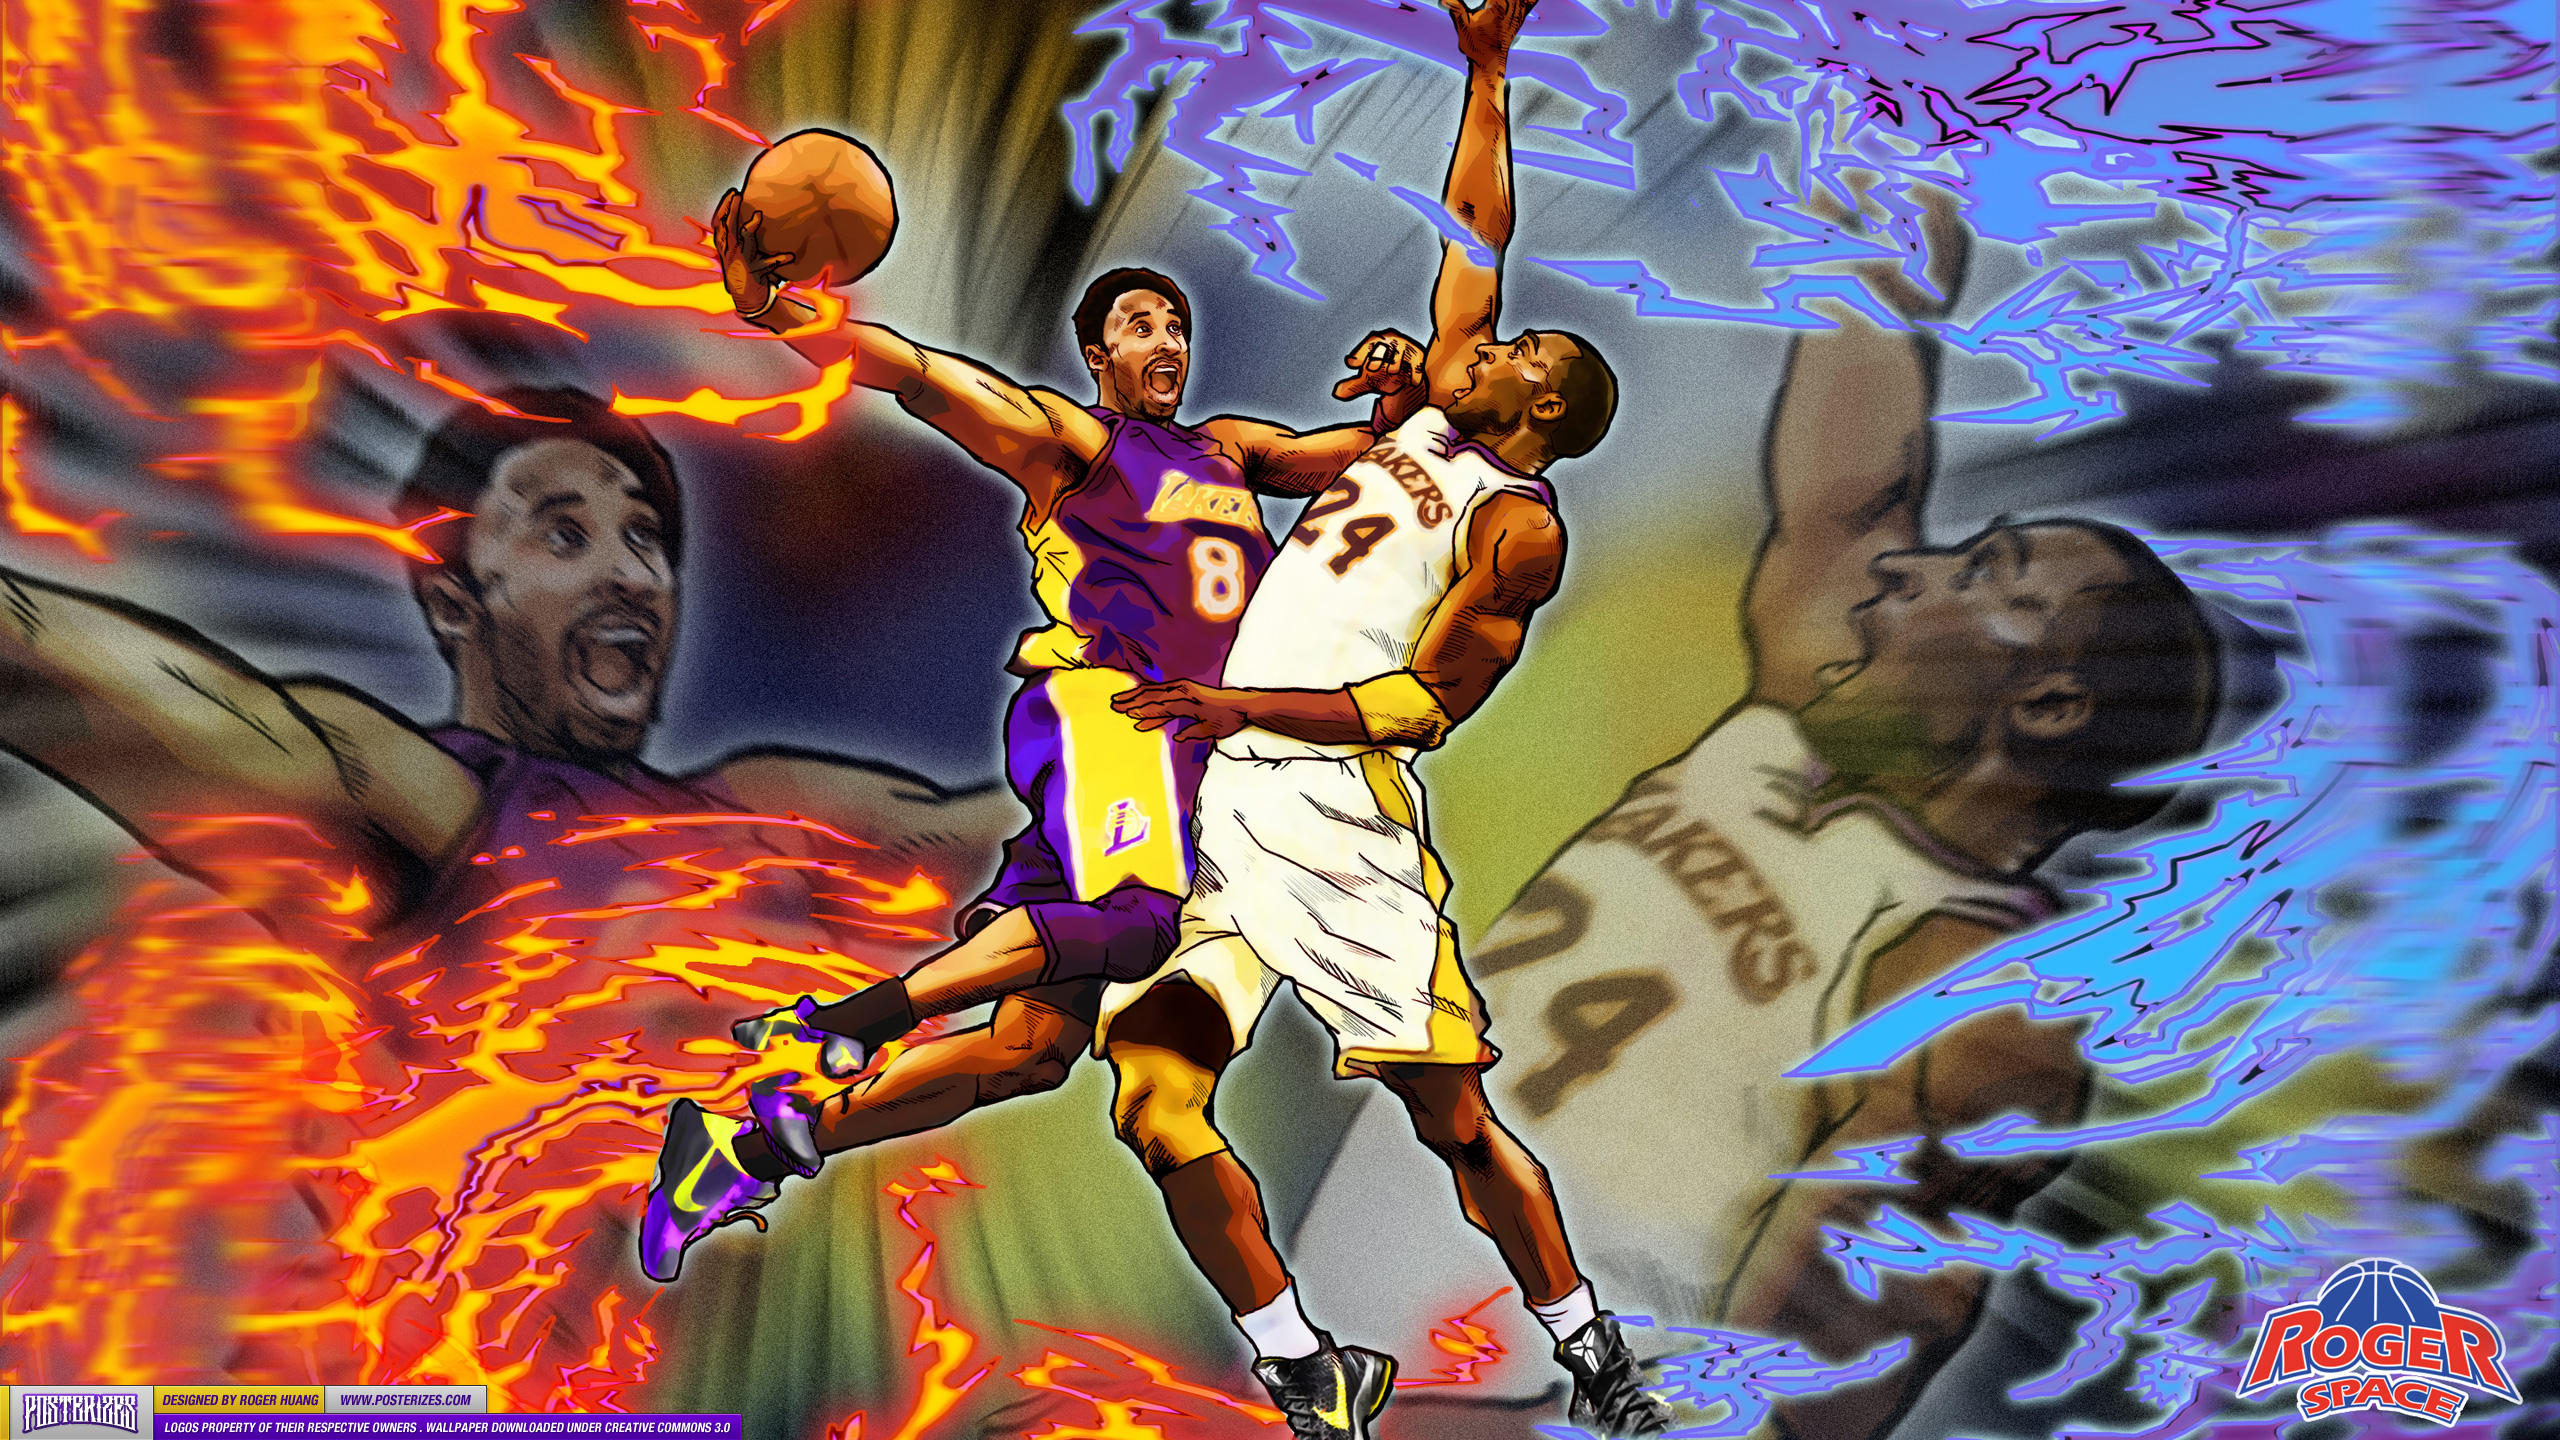 Kobe Bryant Michael Jordan Basketball Wallpapers  Free download and  software reviews  CNET Download